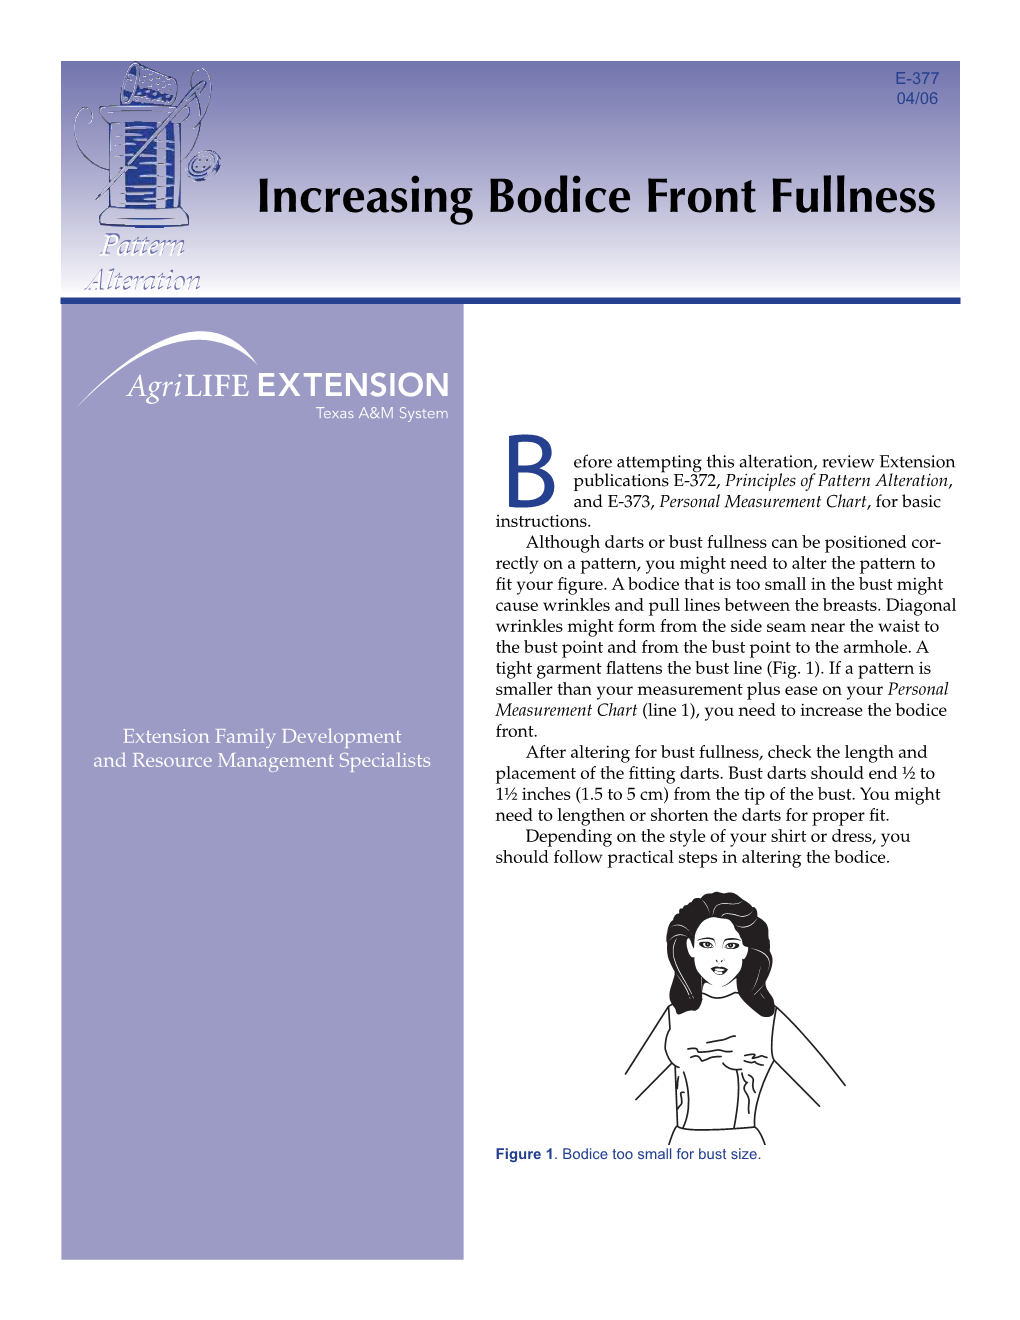 Increasing Bodice Front Fullness Pattern Alteration